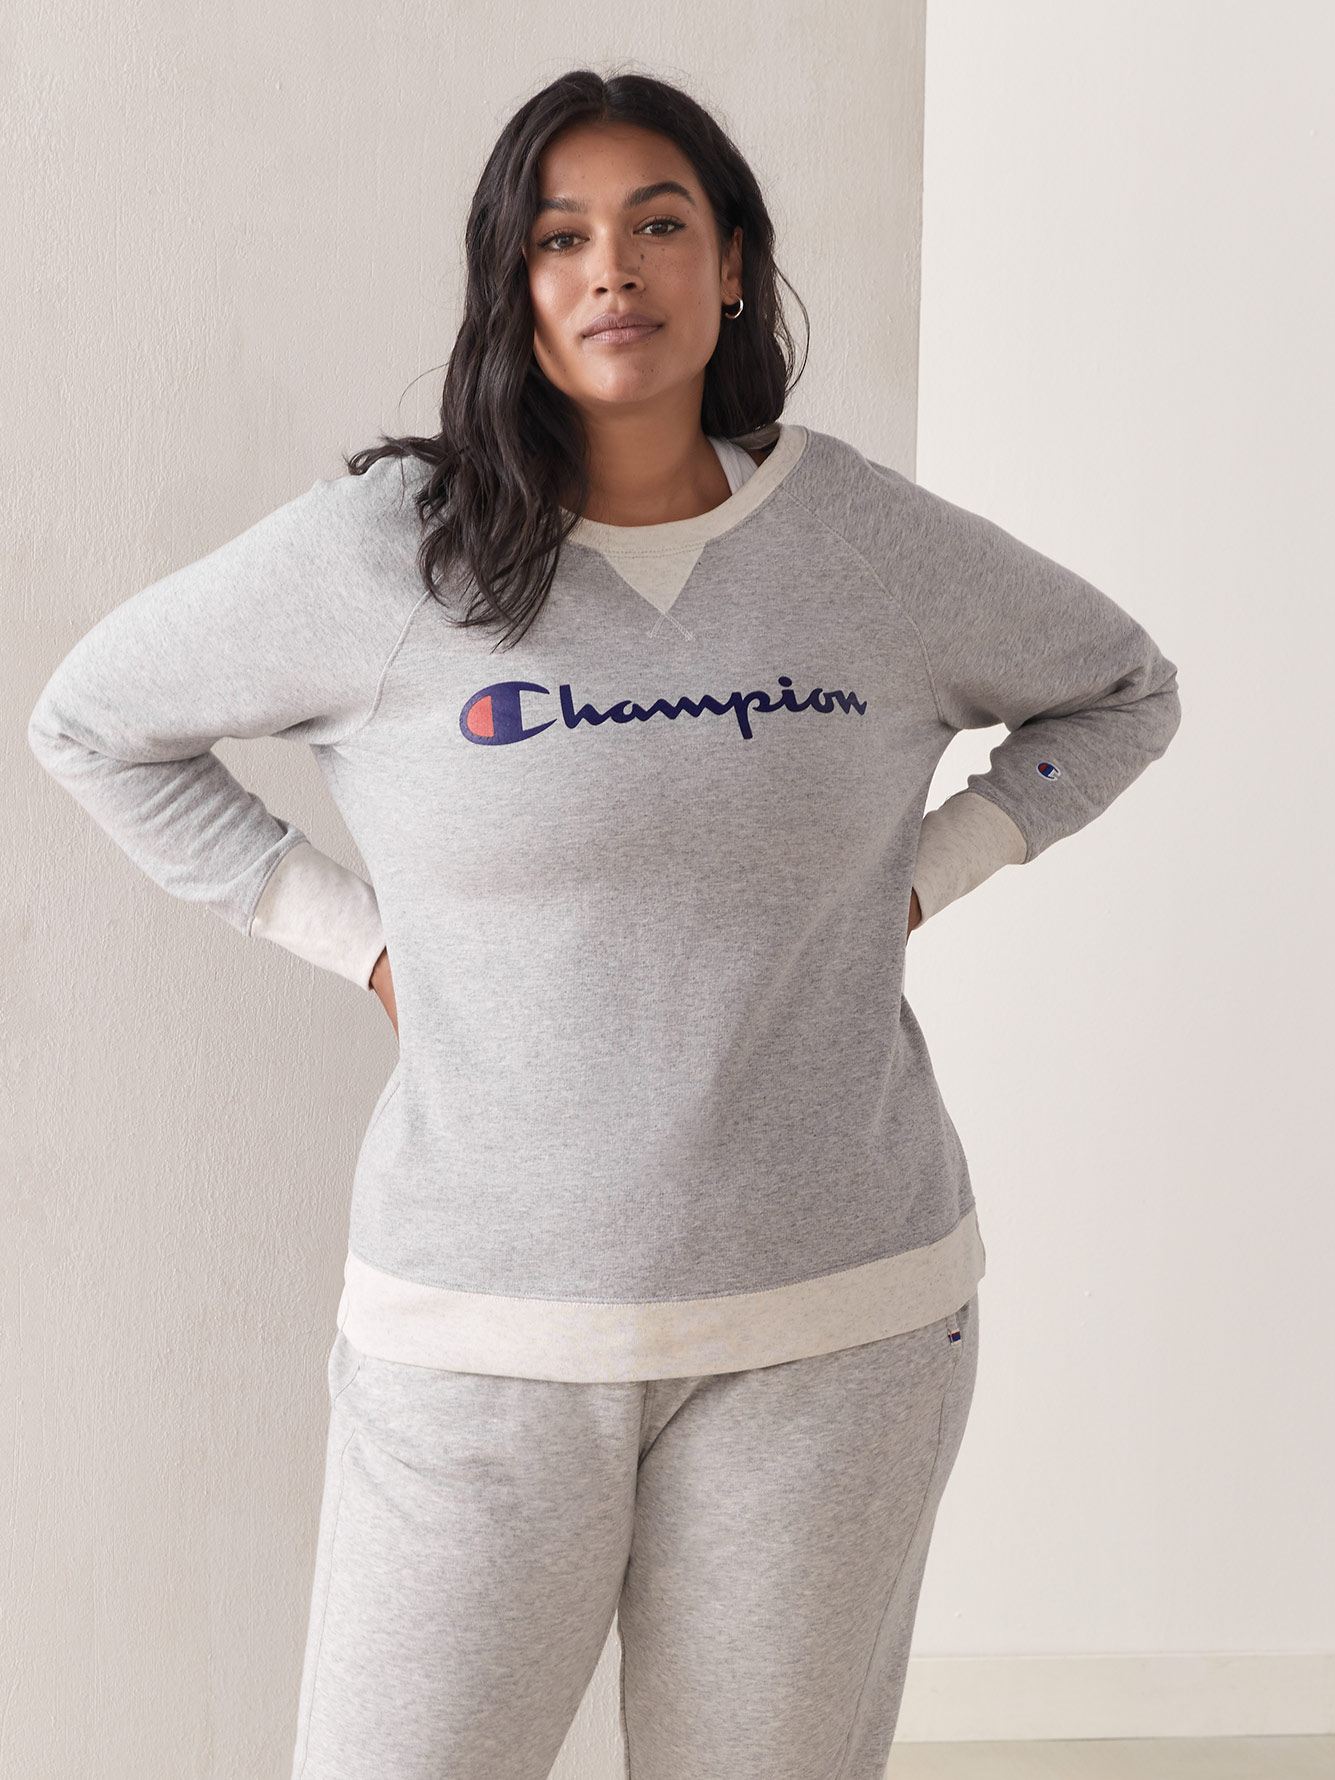 champion sweatshirt plus size